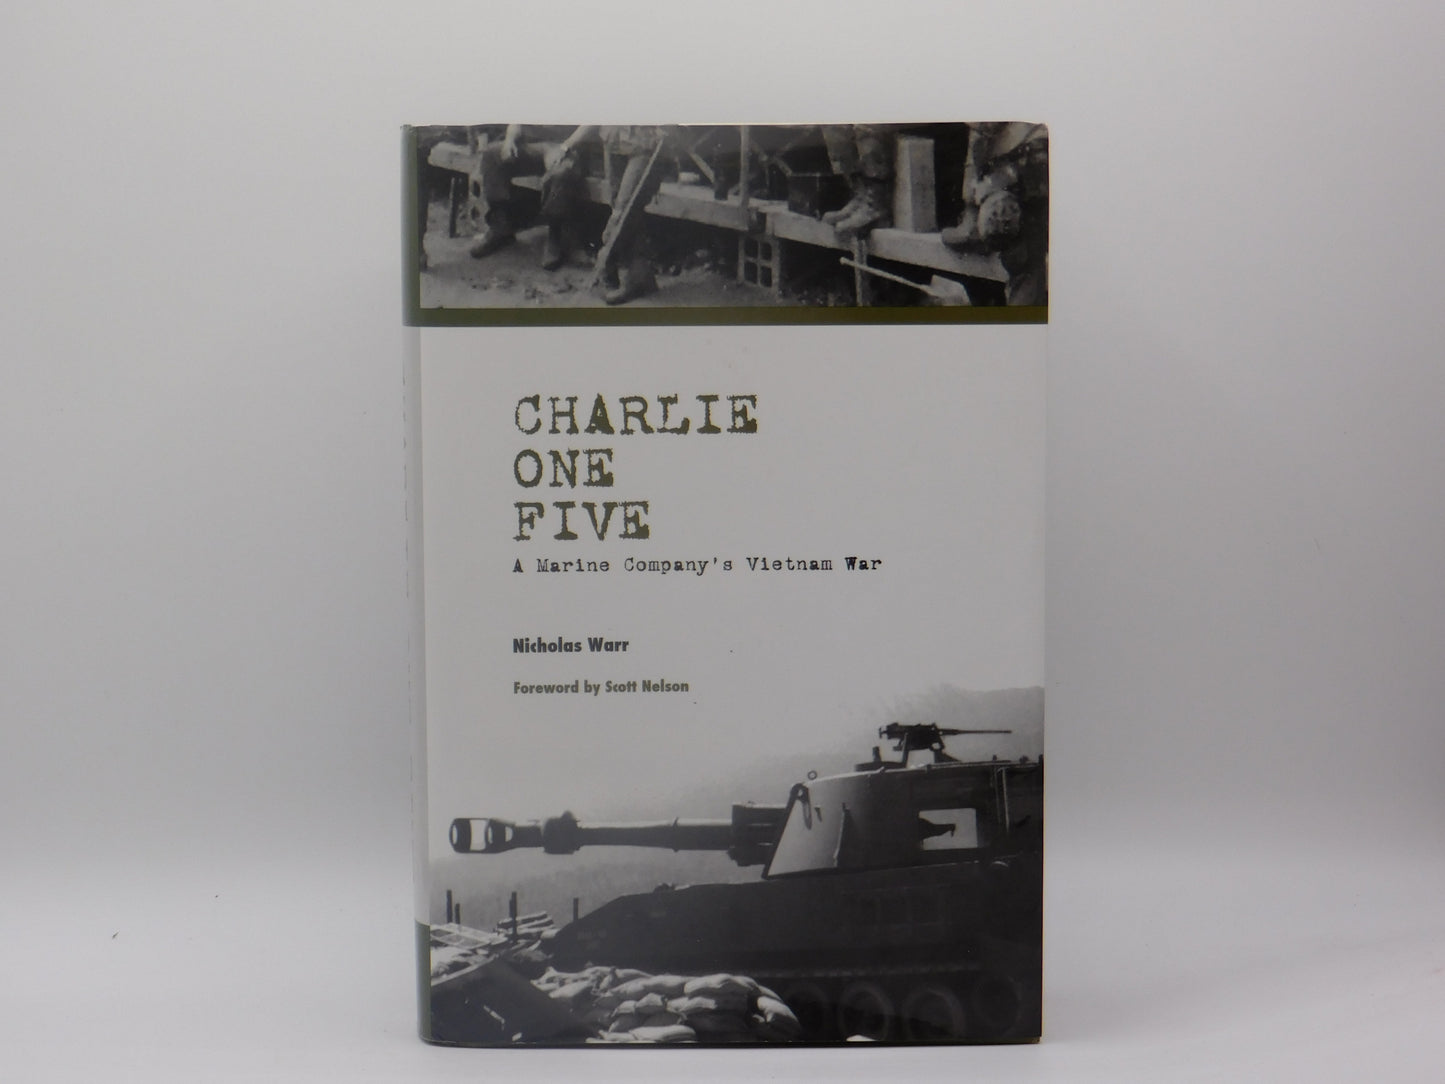 Charlie One Five by Nicholas Warr